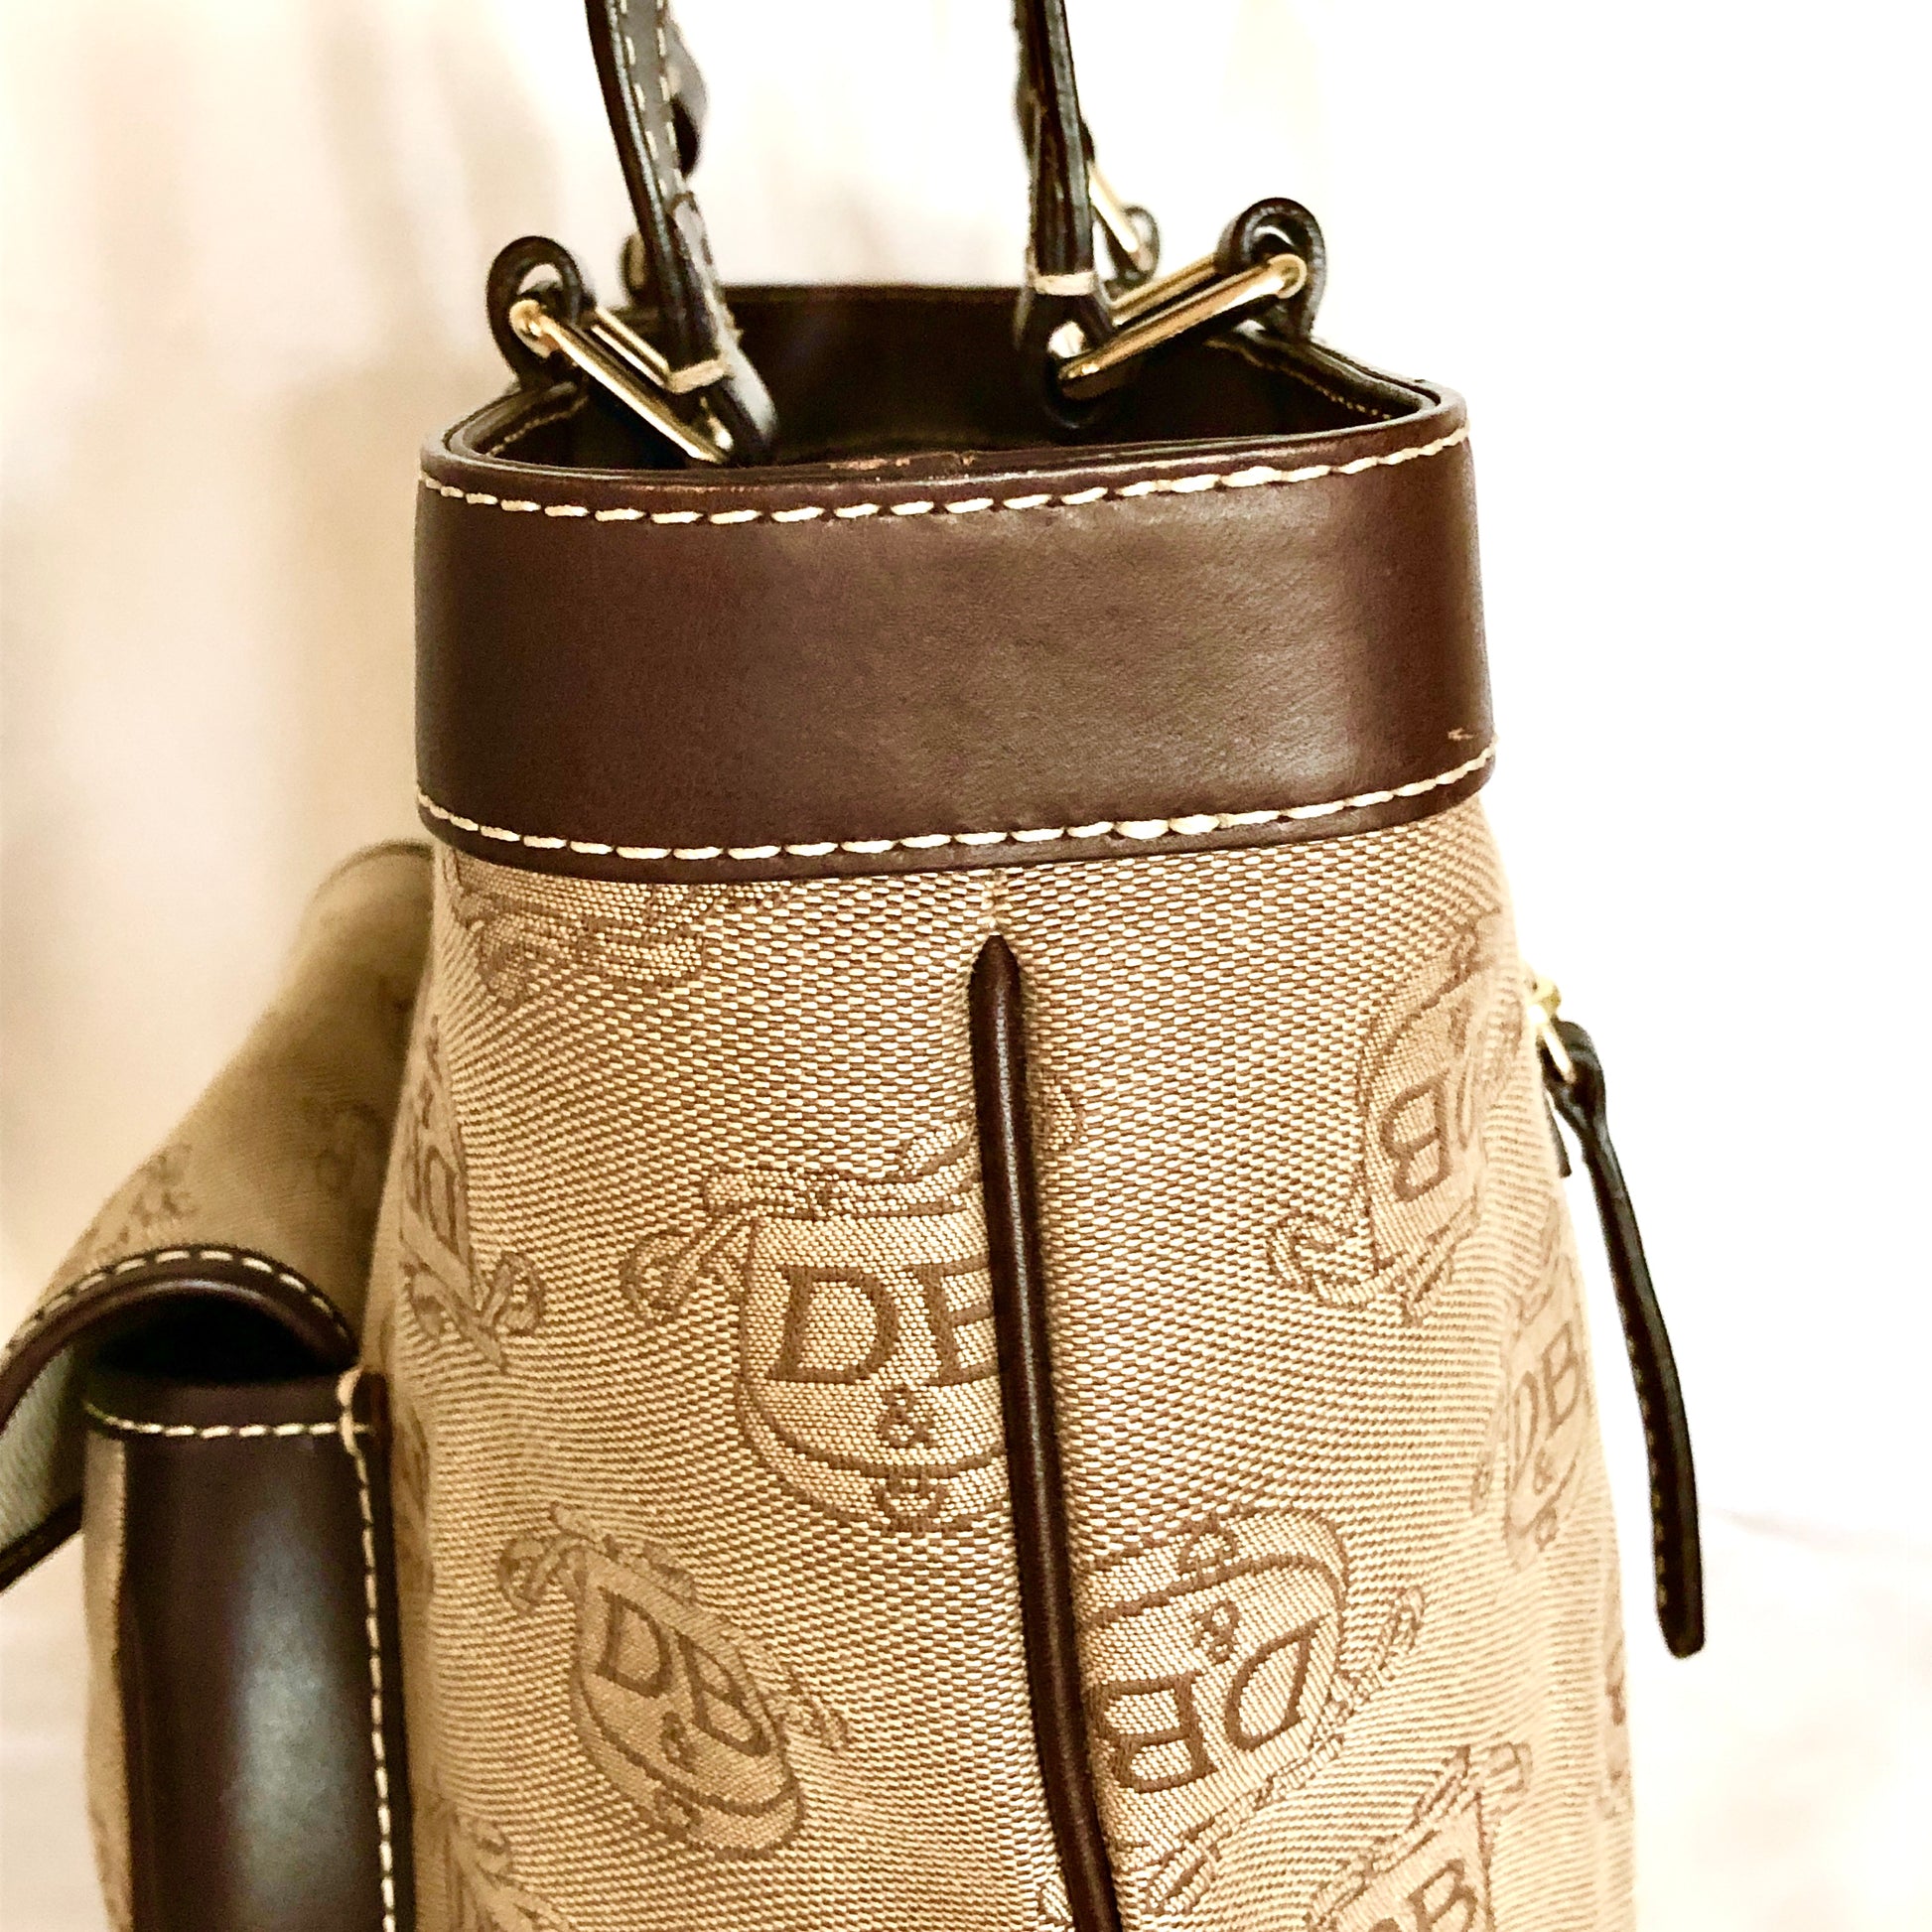 Shoulder bag - Womens Authentic Dooney & Bourke Donegal Collection Leather Signature Purse / Shoulder Bag